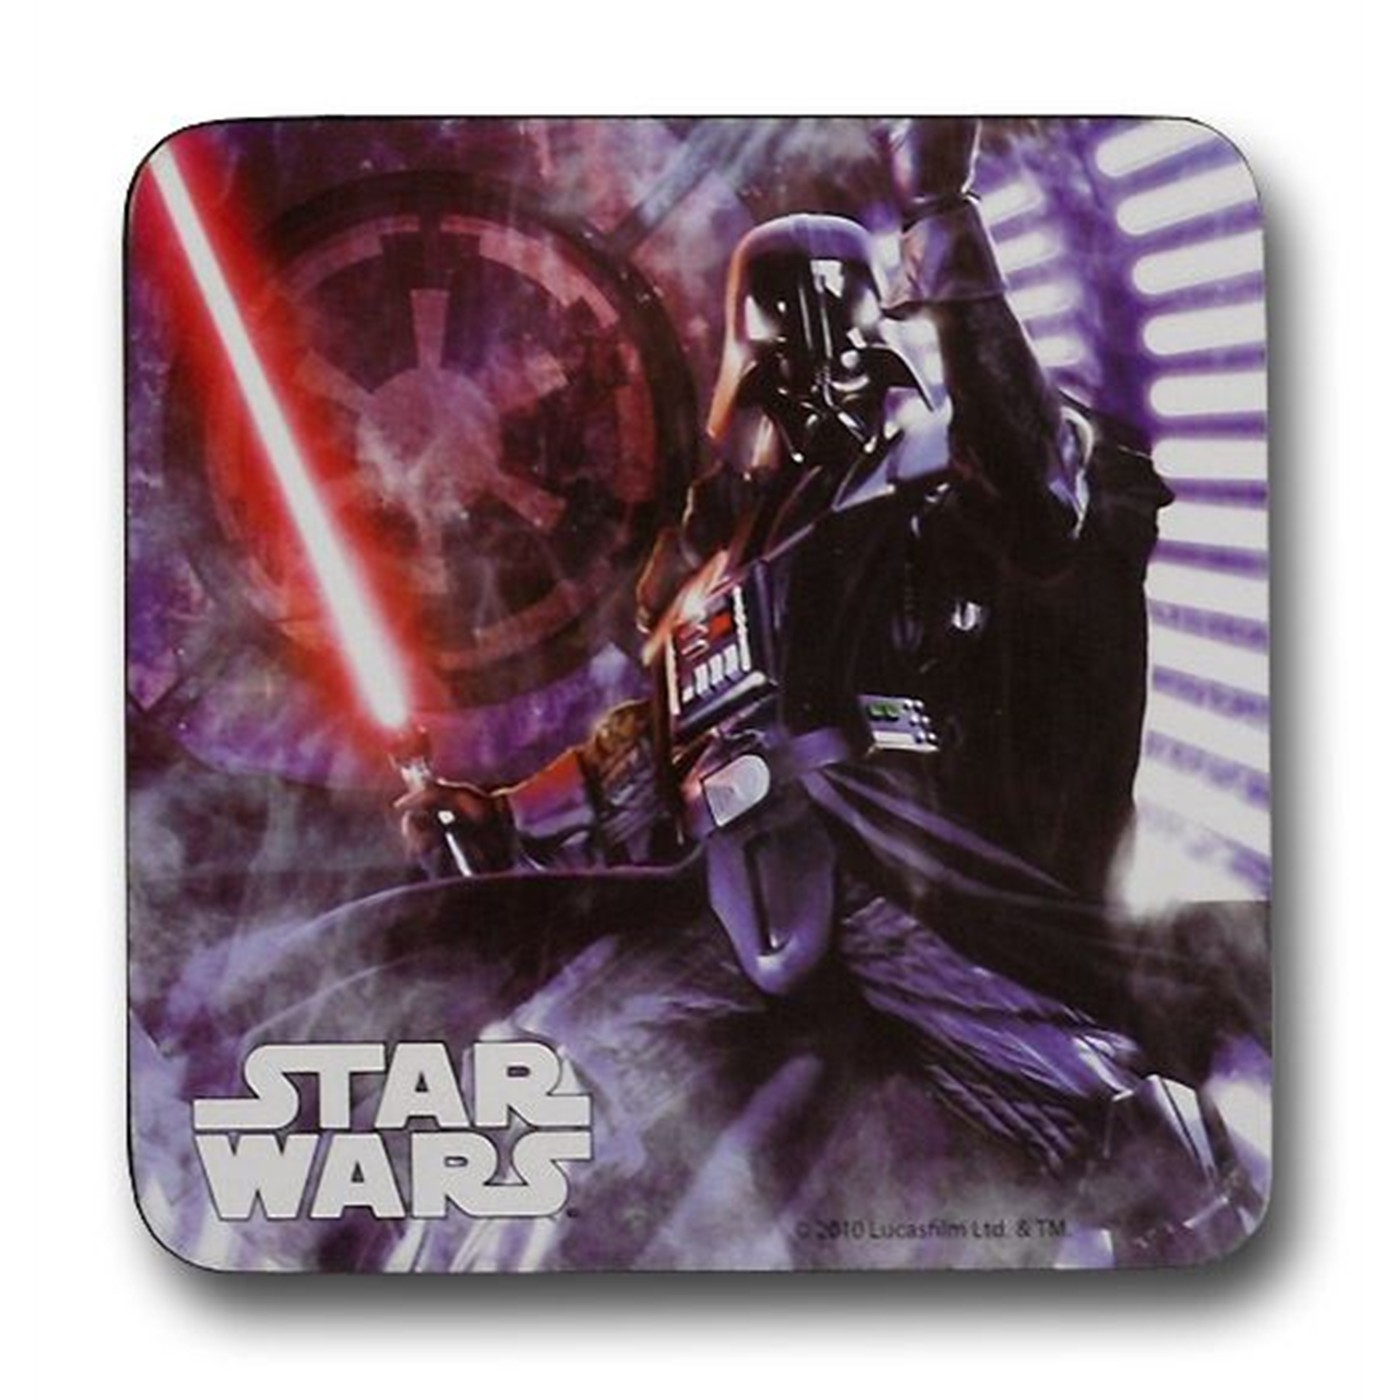 Star Wars 4 pc. Wood Coaster Set